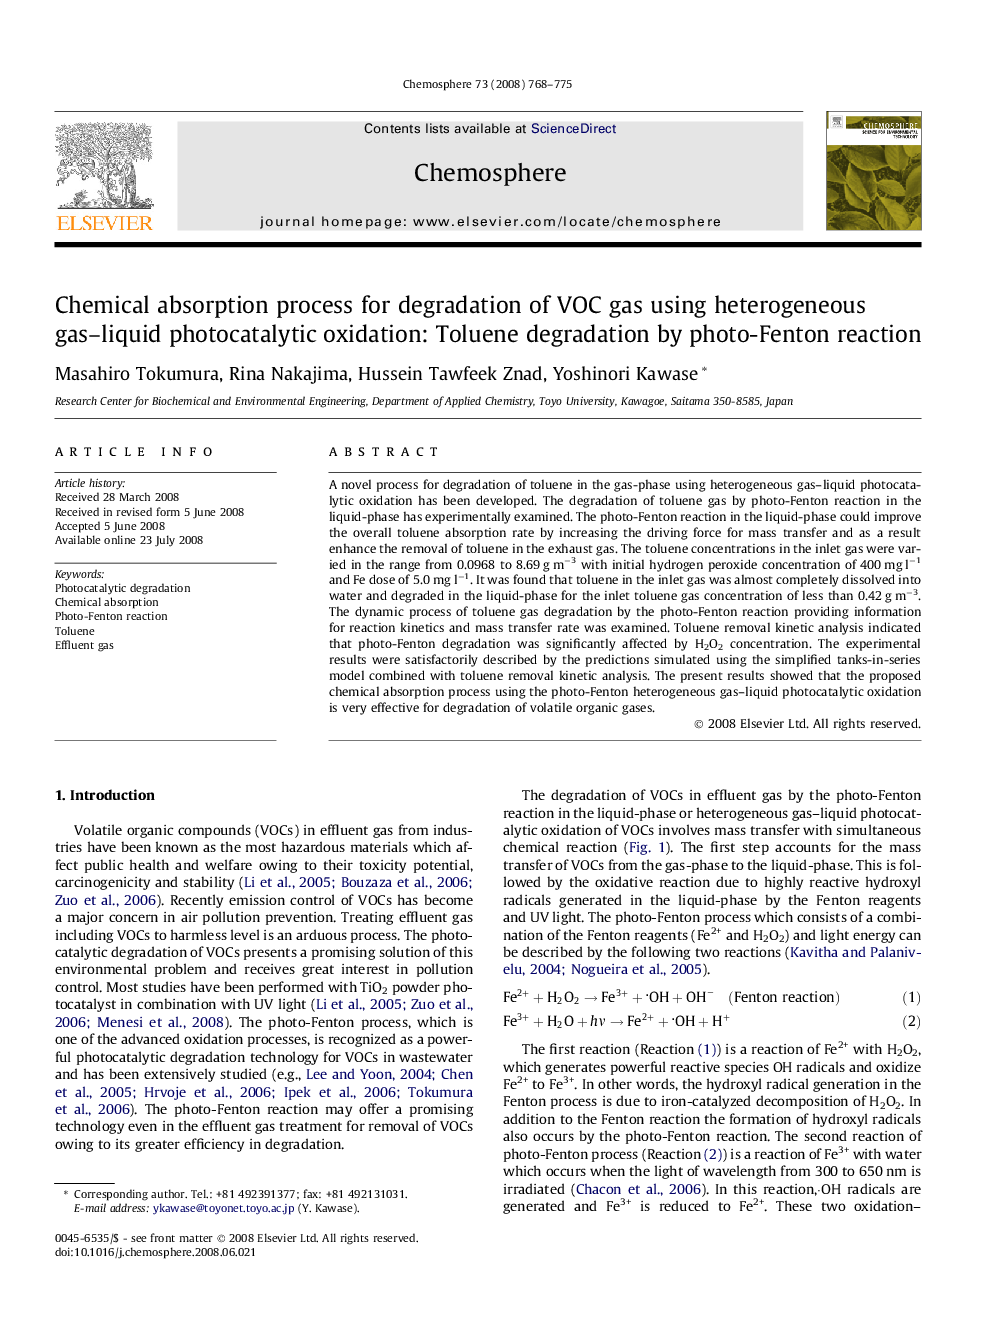 Chemical absorption process for degradation of VOC gas using heterogeneous gas–liquid photocatalytic oxidation: Toluene degradation by photo-Fenton reaction